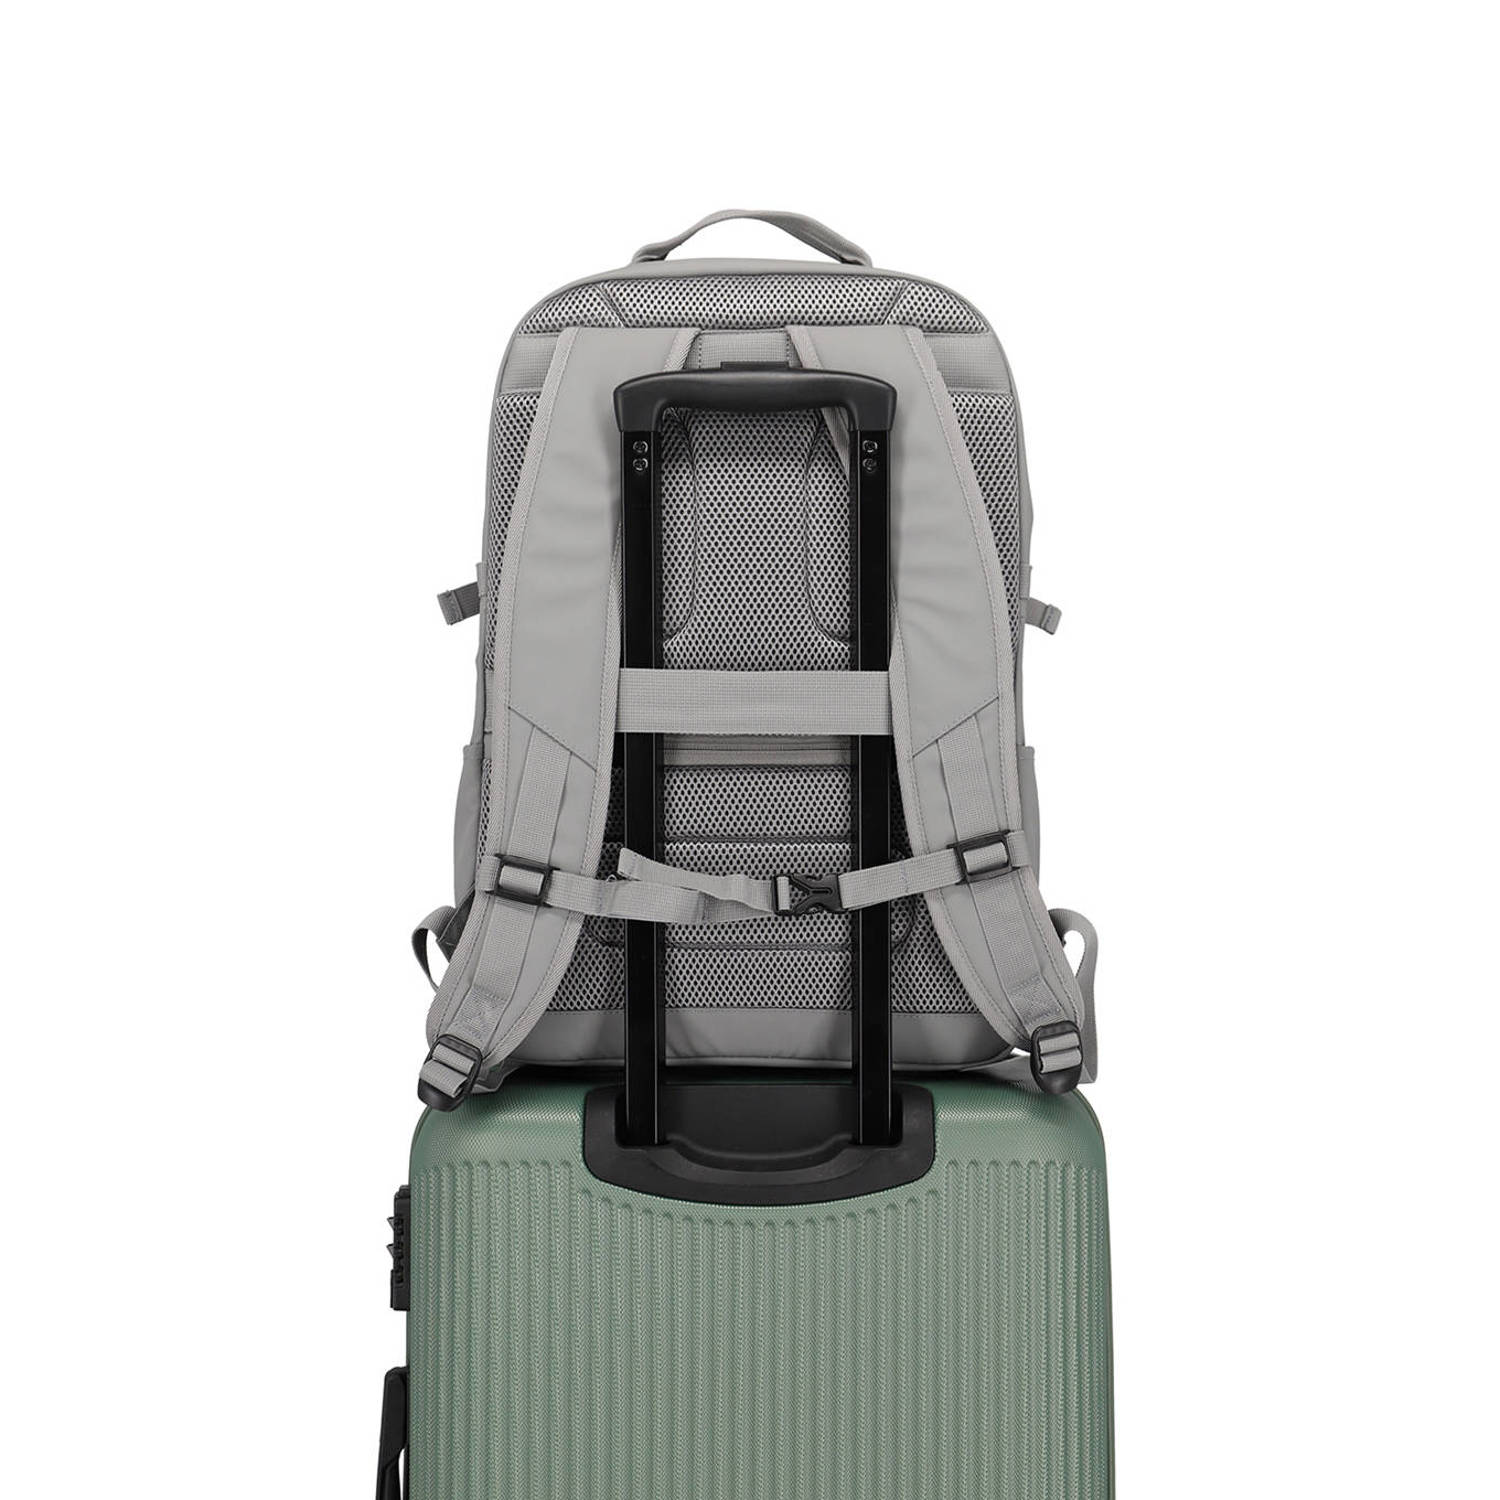 Travelite rugzak Basics Backpack grijs